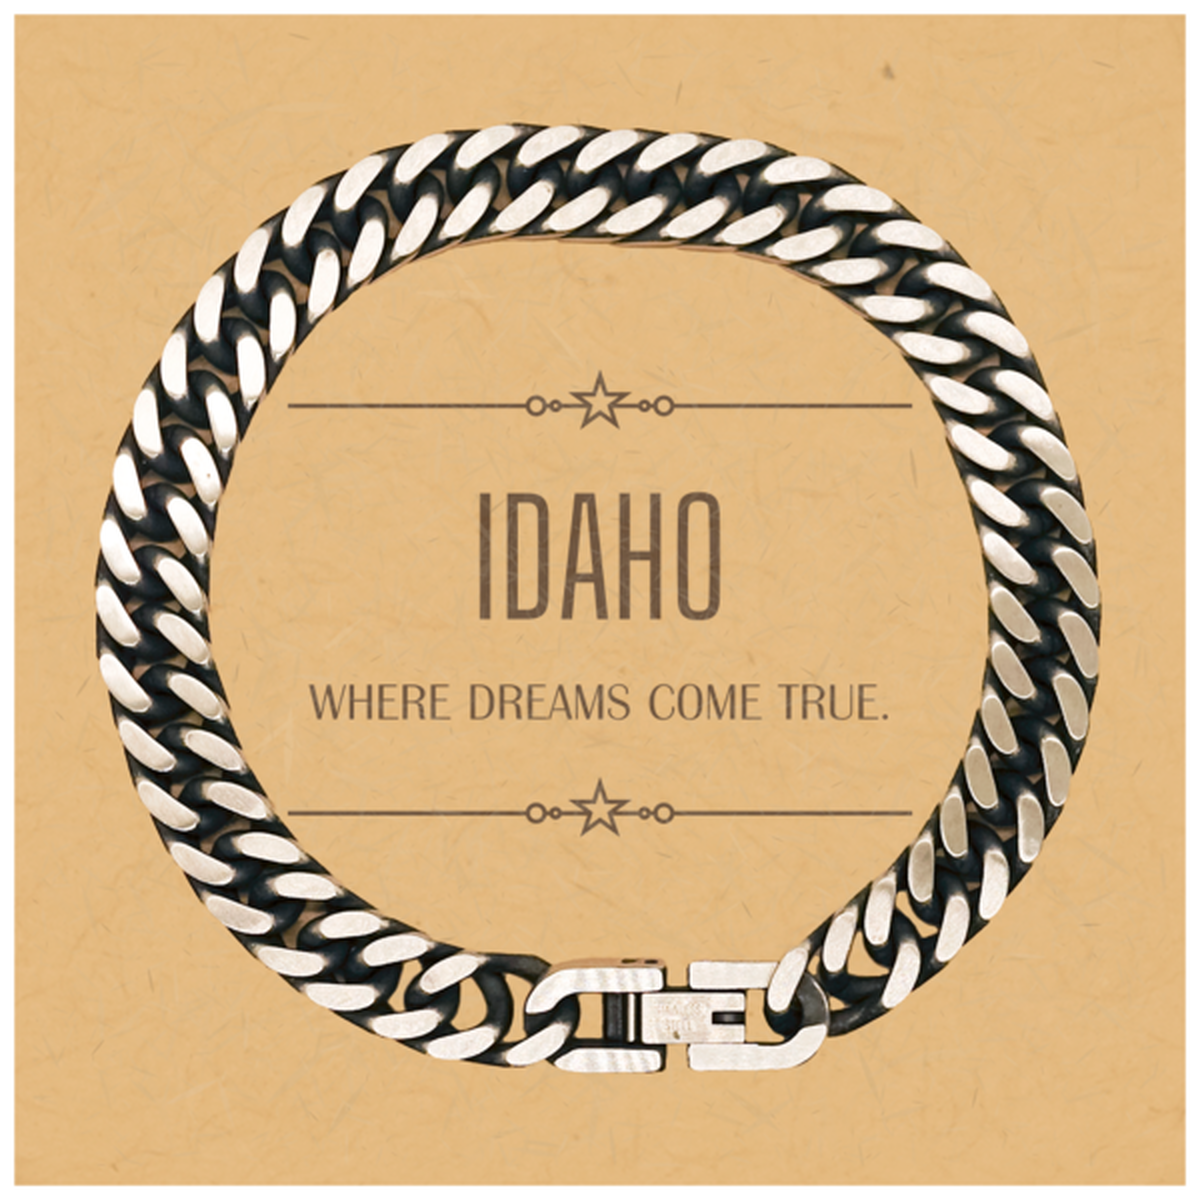 Love Idaho State Cuban Link Chain Bracelet, Idaho Where dreams come true, Birthday Christmas Inspirational Gifts For Idaho Men, Women, Friends